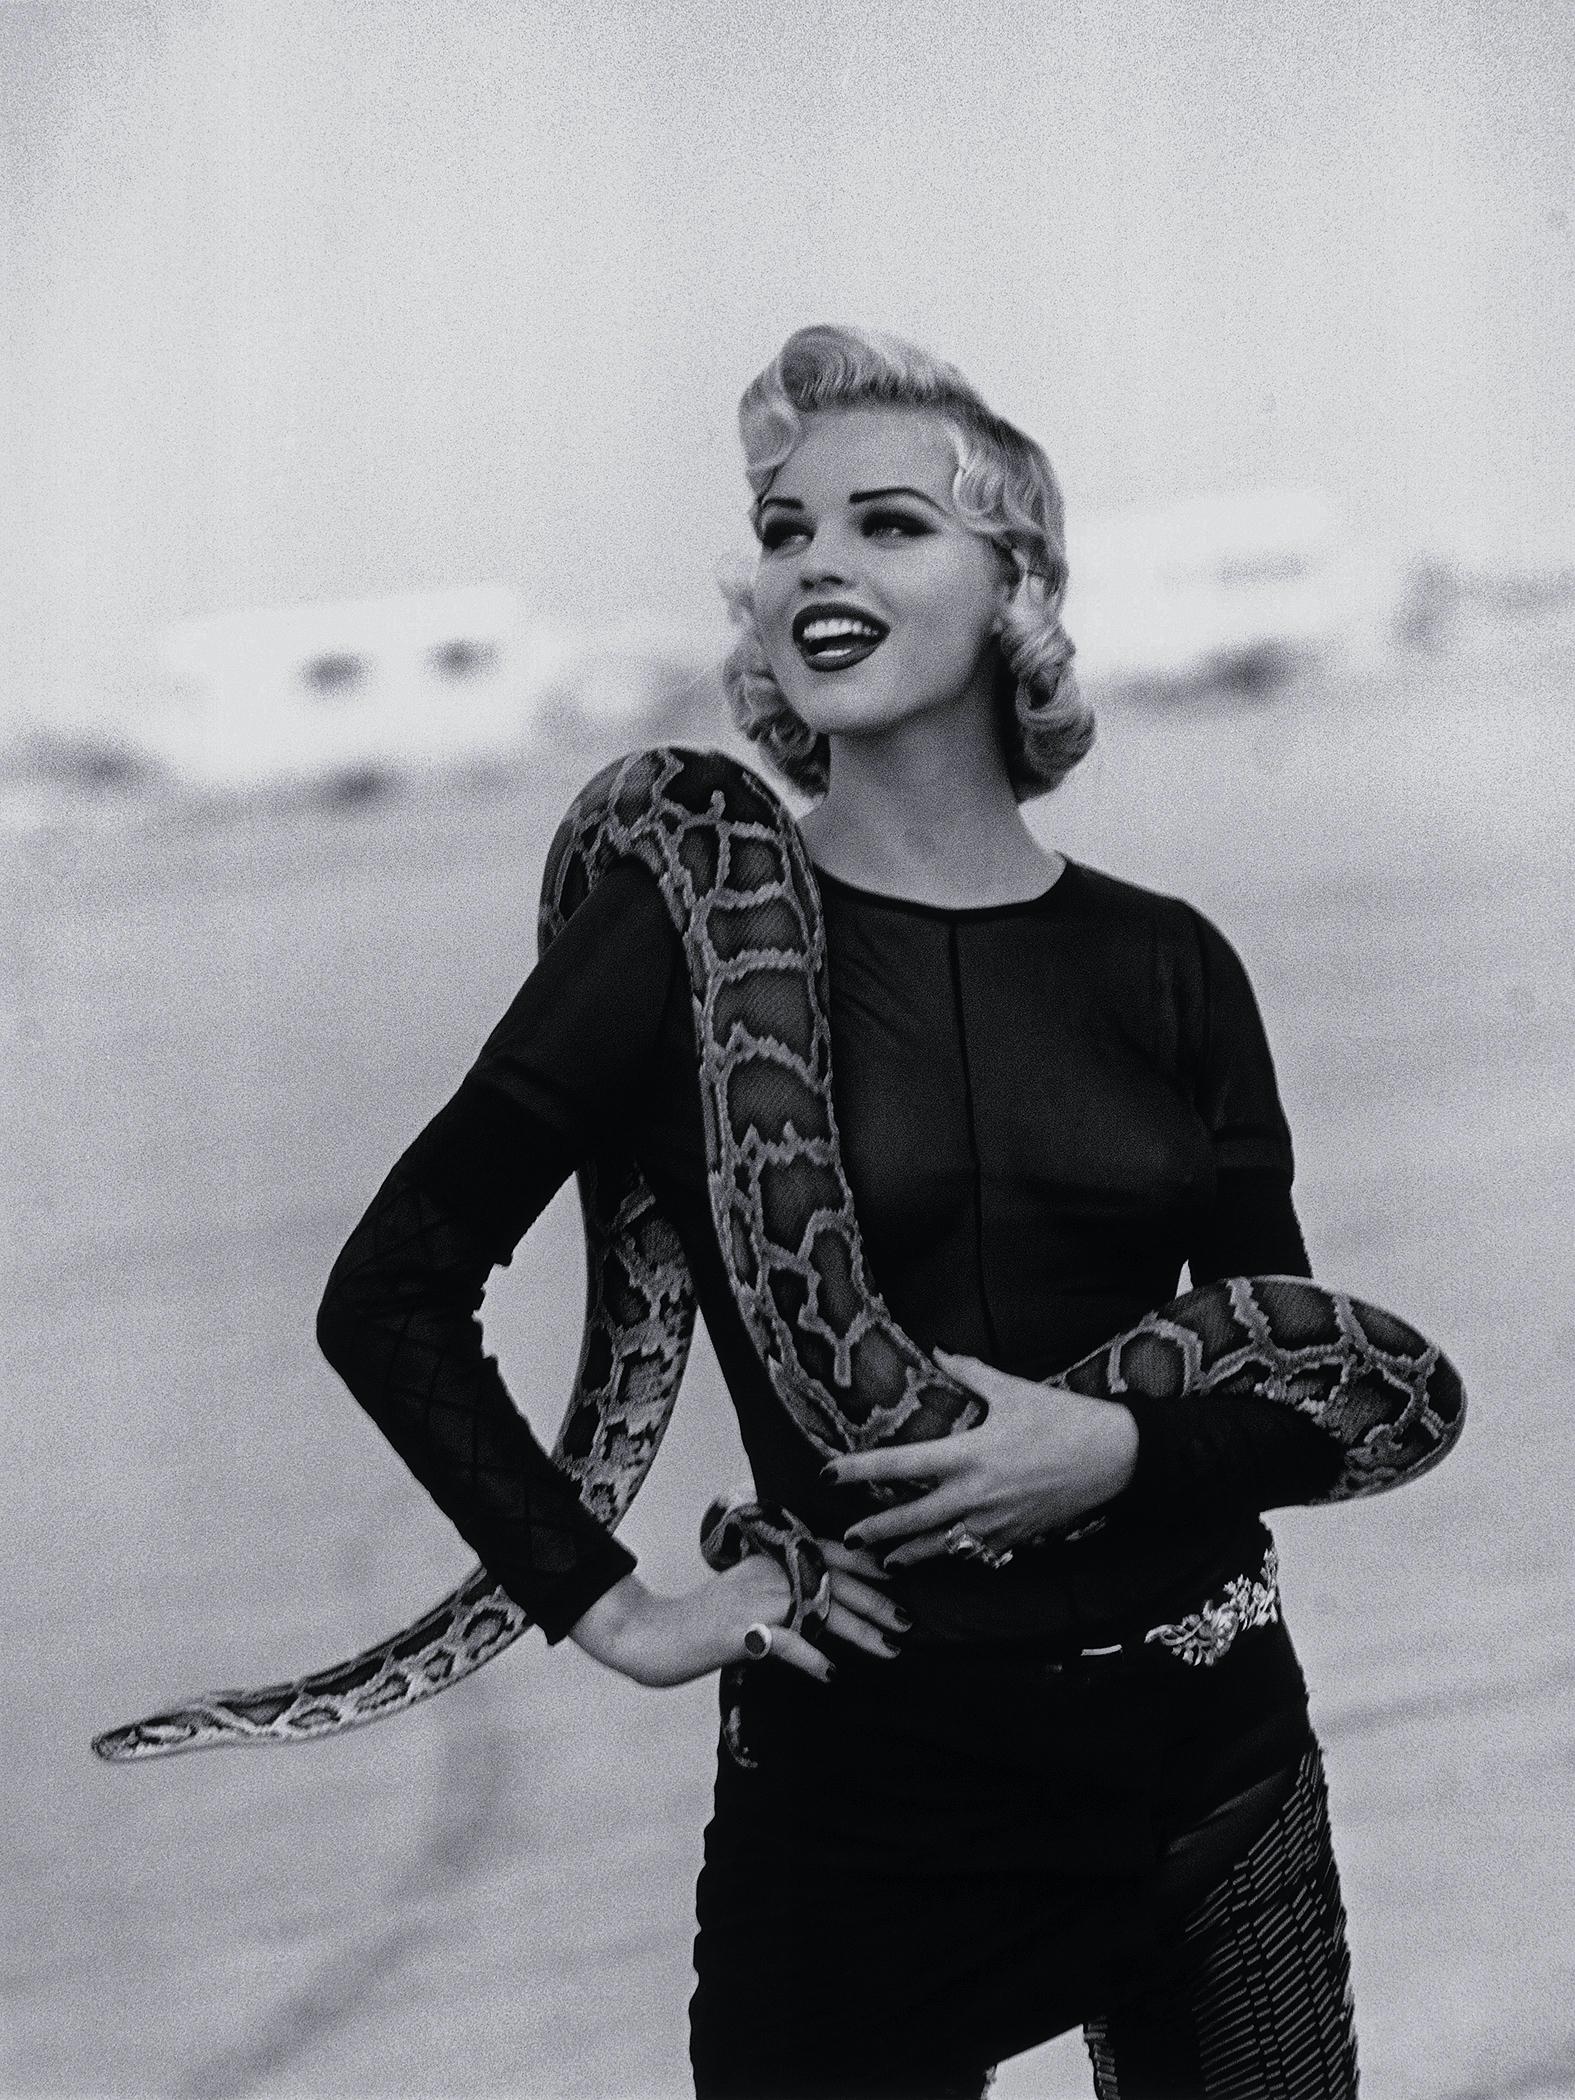 Jacques Olivar Portrait Photograph - Eva Herzigova and her Java python, South of France